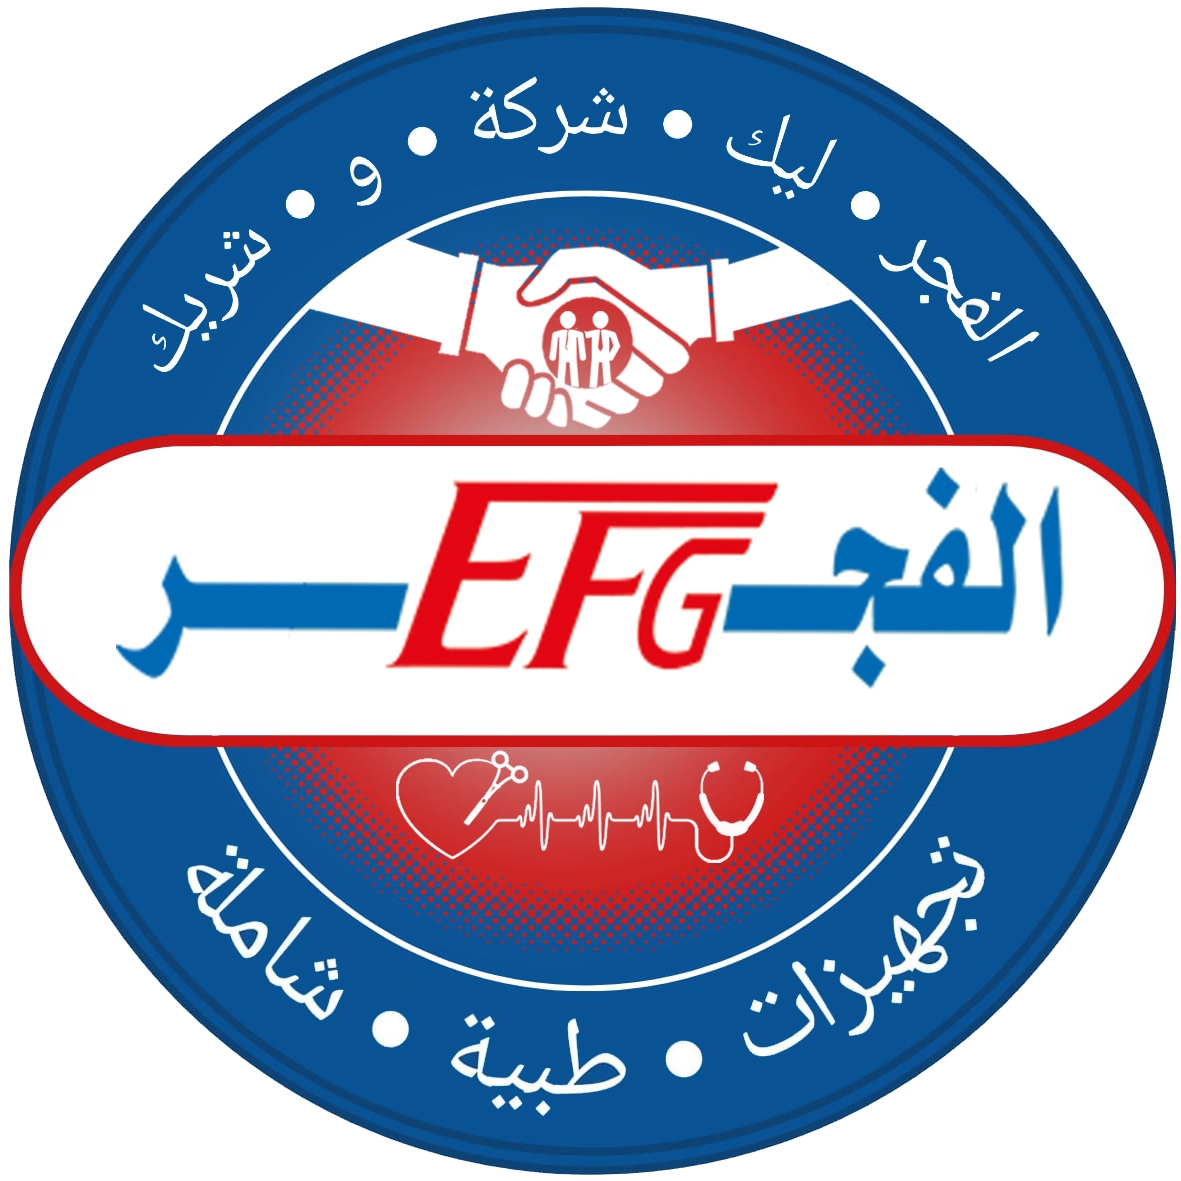 Company logo of elfagr for medical devices